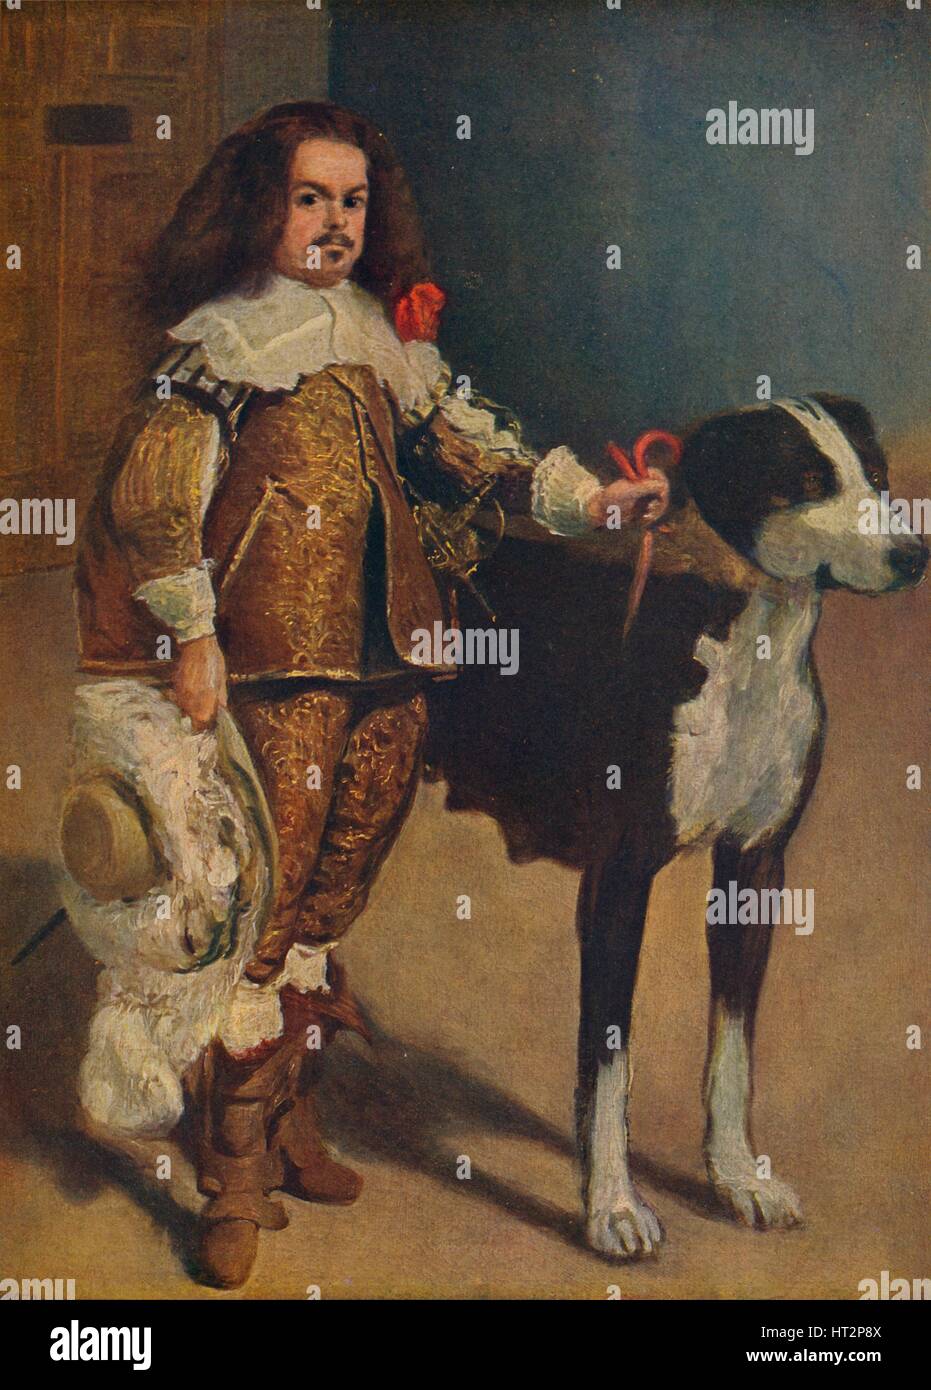 'Retrato del bufon Don Antonio, el 'Inglés', (Portrait of Jester Don Antonio), 1650, (c1934). Artist: Diego Velasquez. Stock Photo